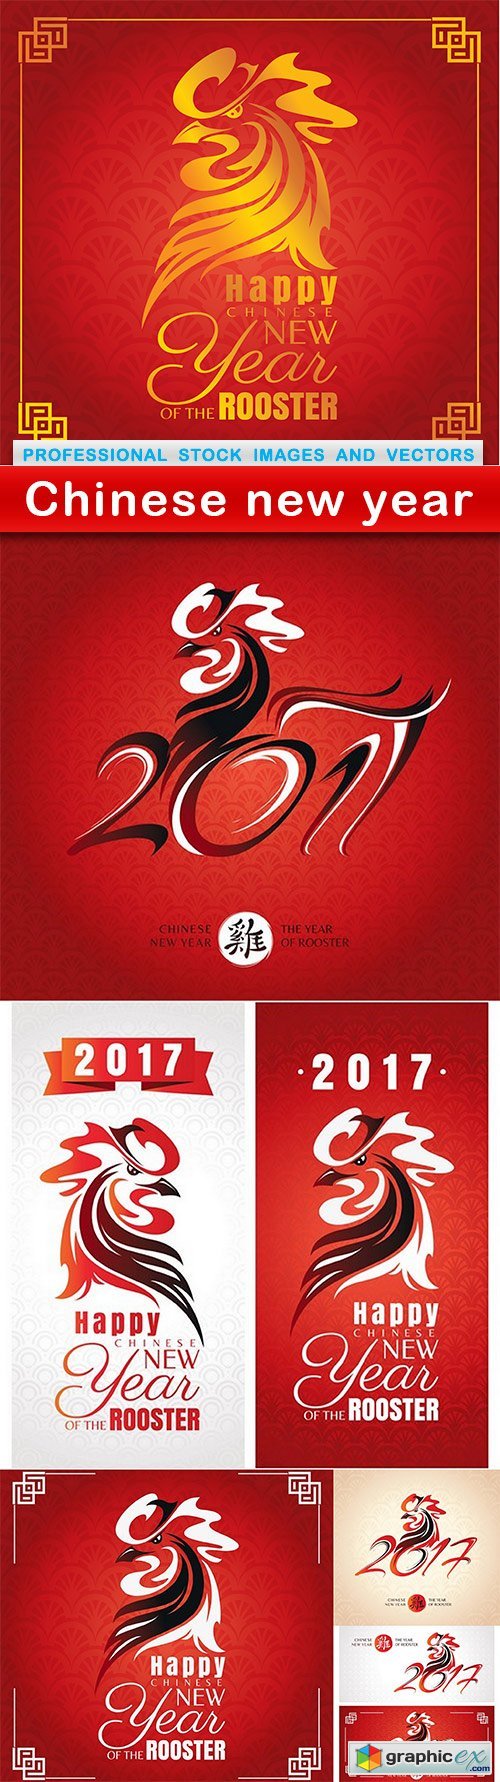 Chinese new year - 6 EPS